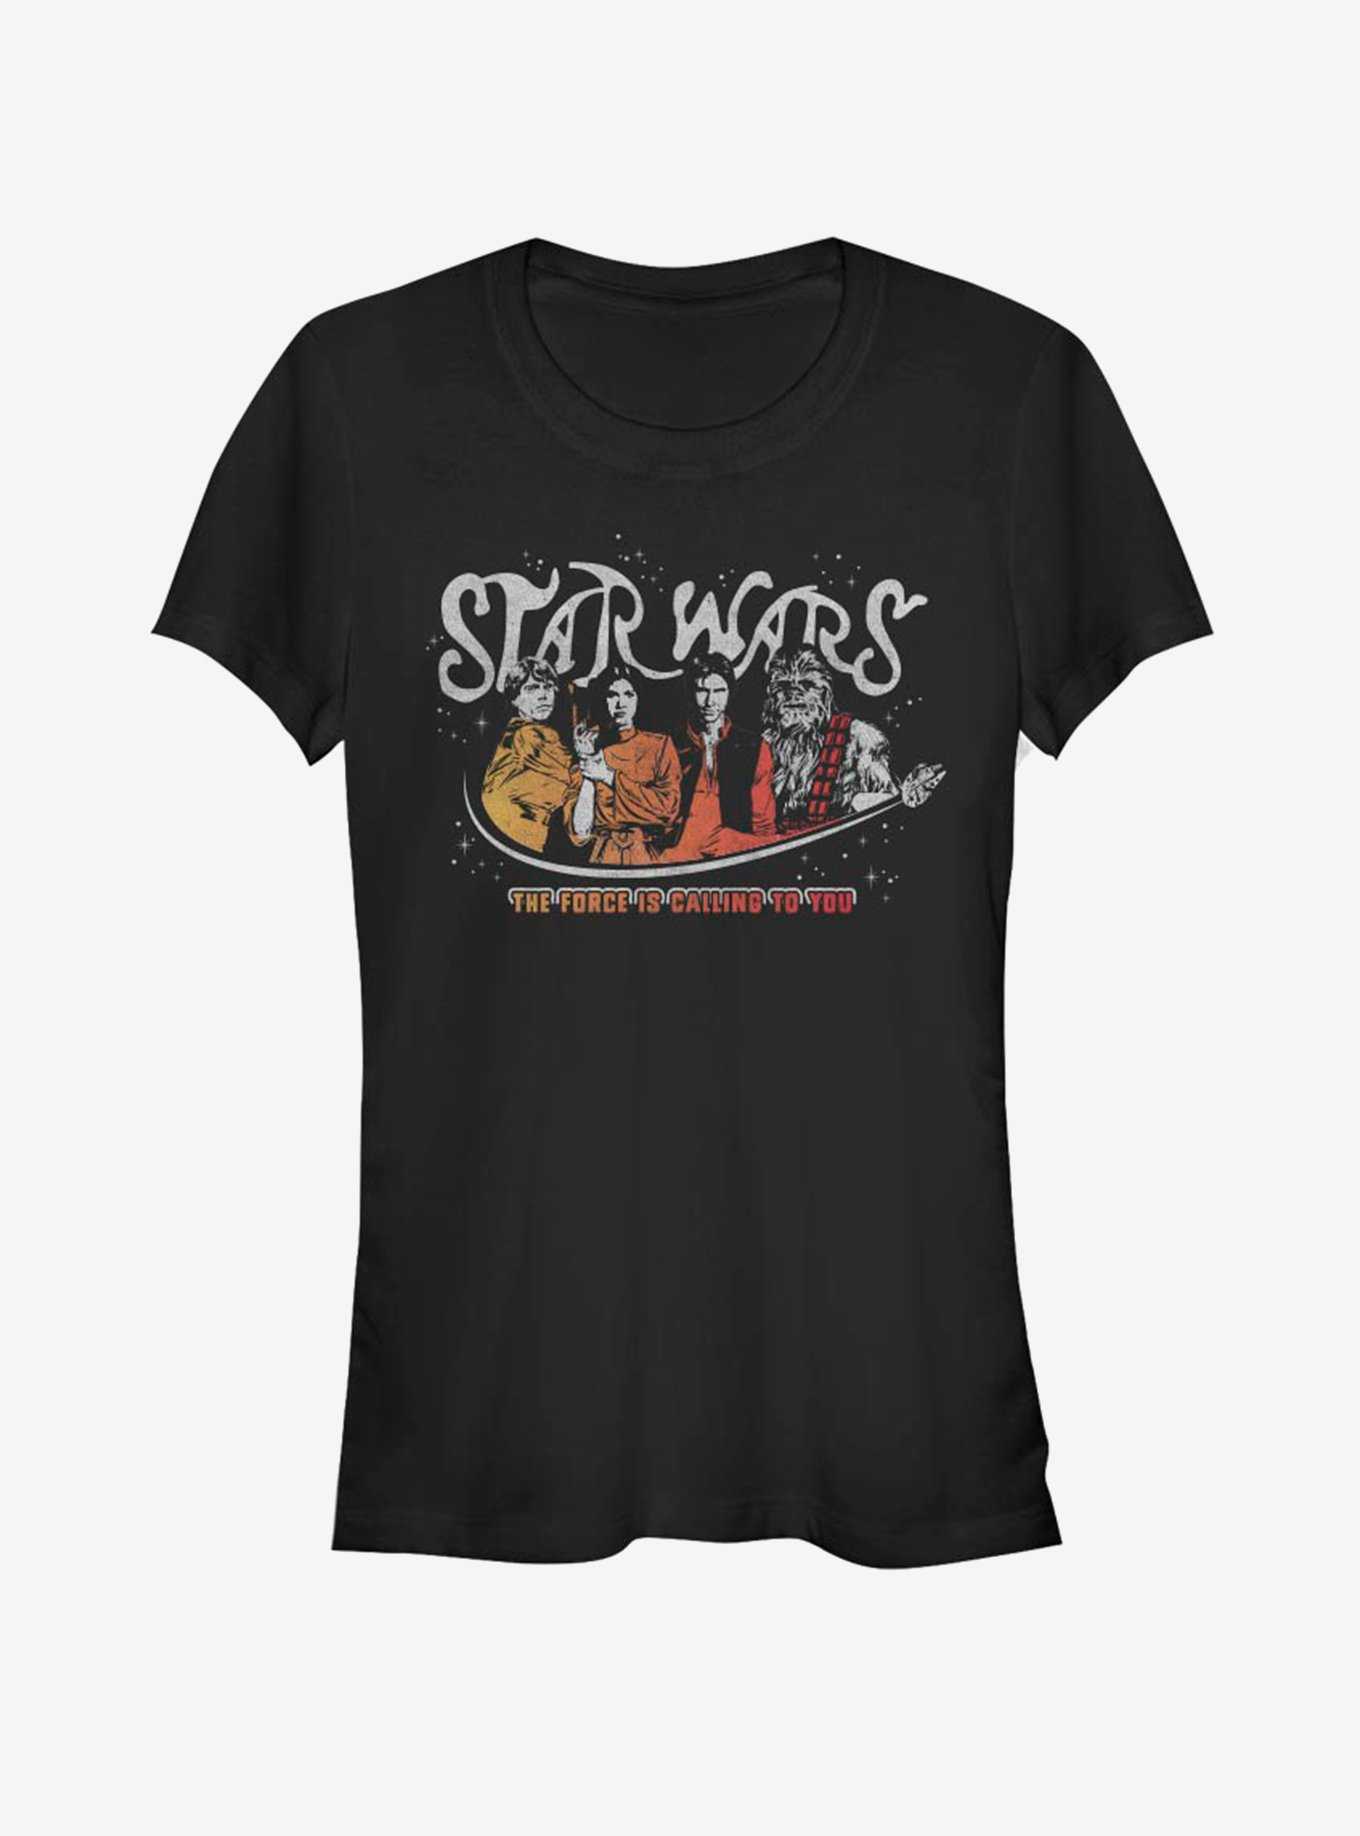 Star Wars Kissin' Hair Girls T-Shirt, , hi-res